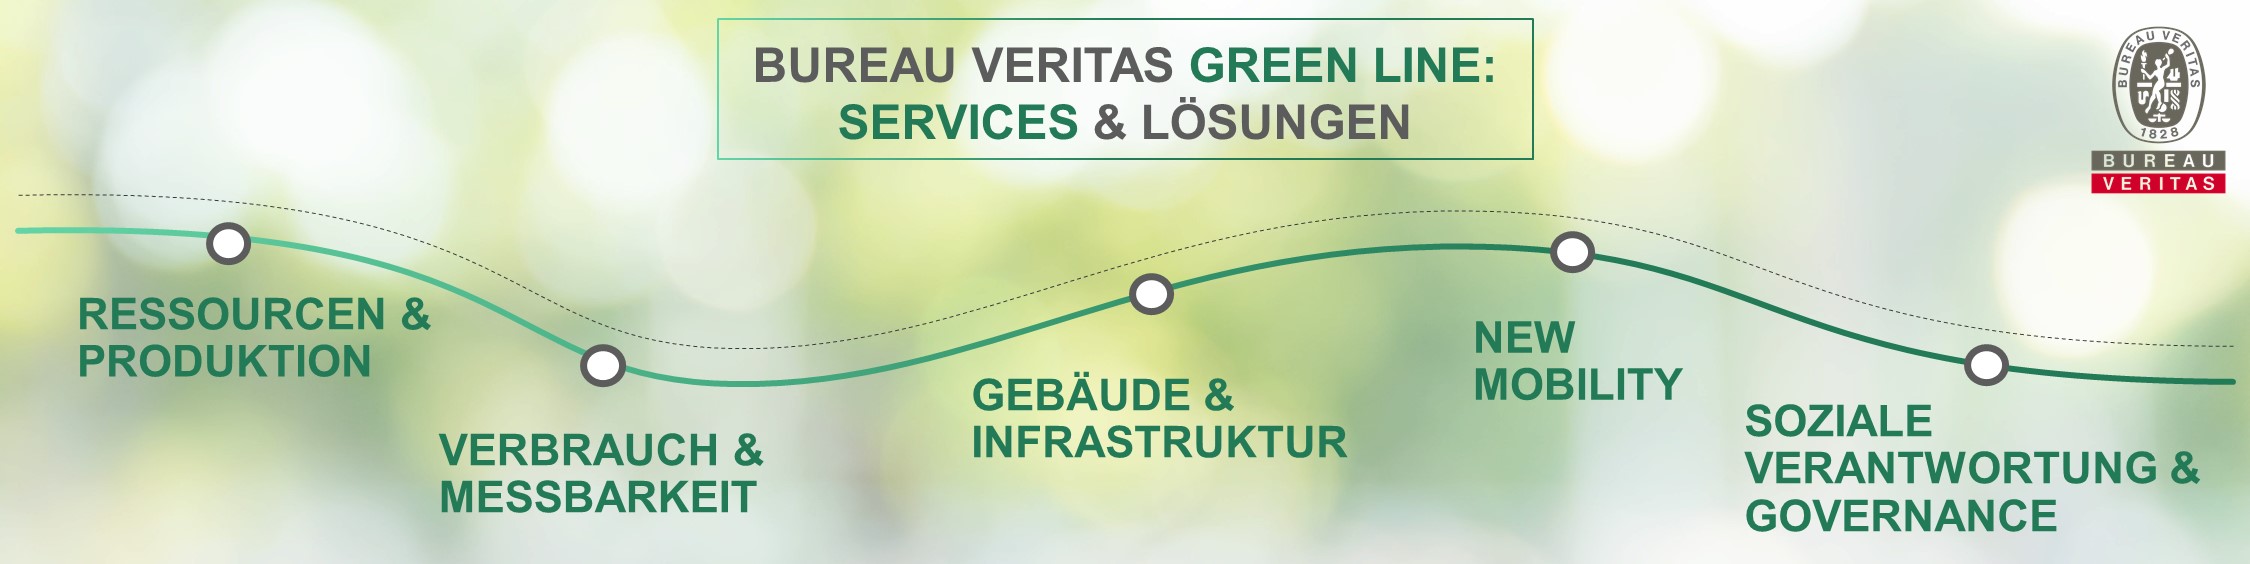 BVs Green Line Banner